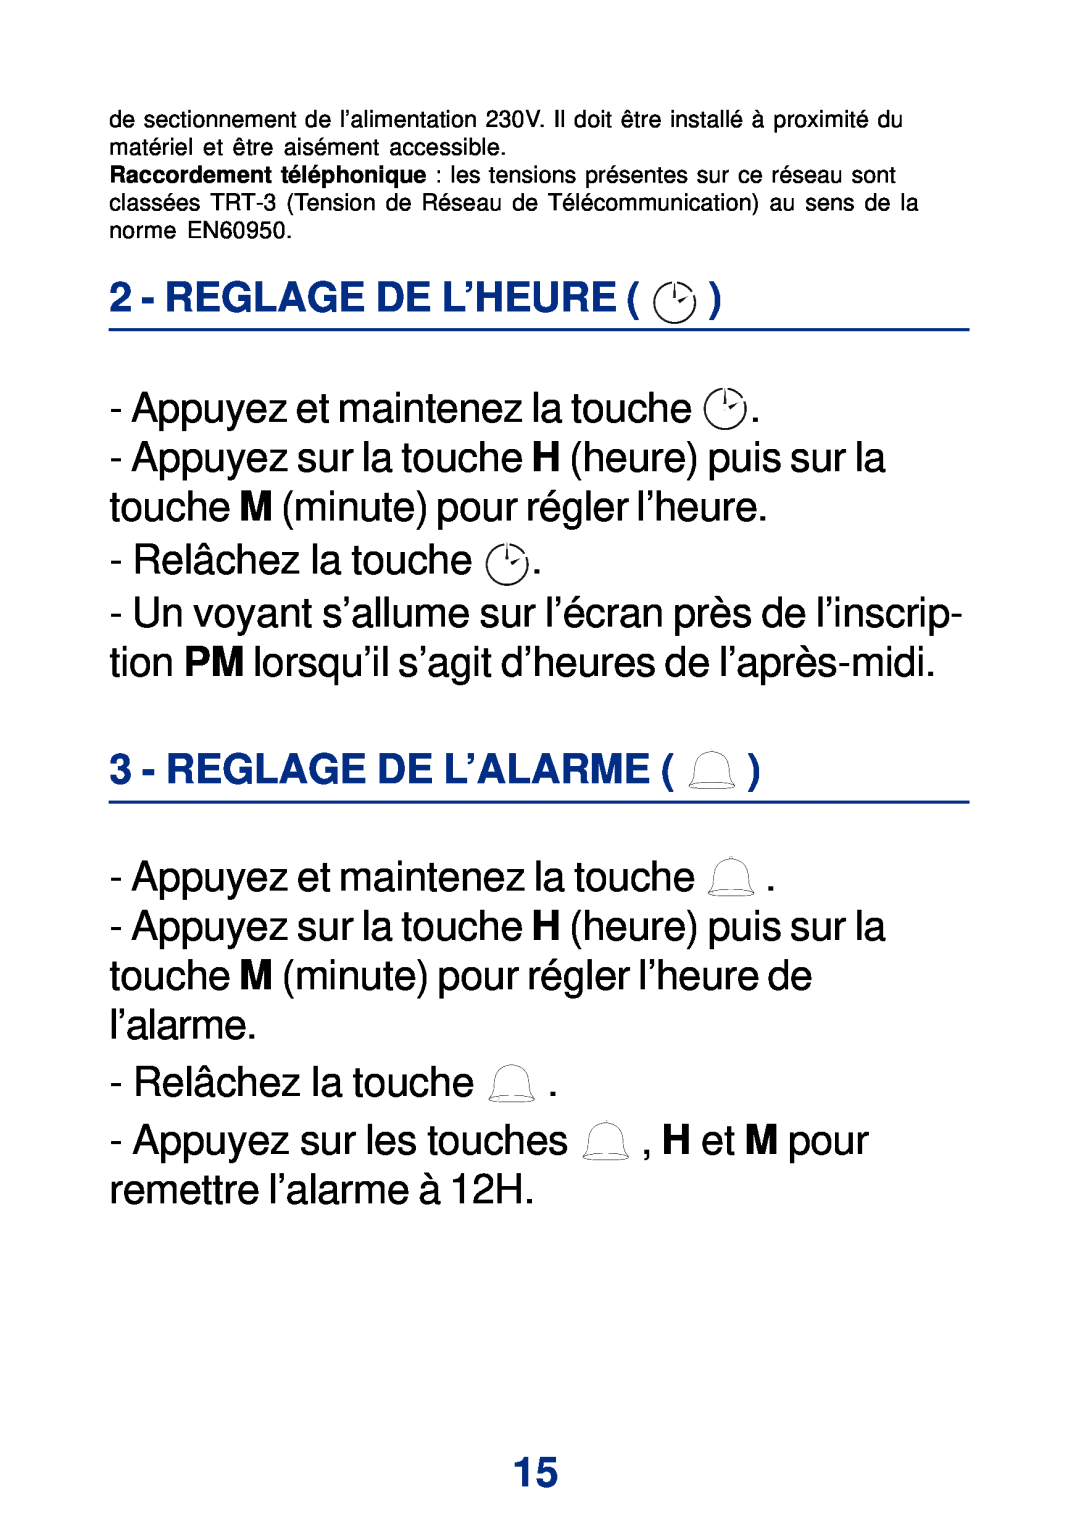 Geemarc Large Display Alarm Clock manual Reglage De L’Heure, Reglage De L’Alarme 